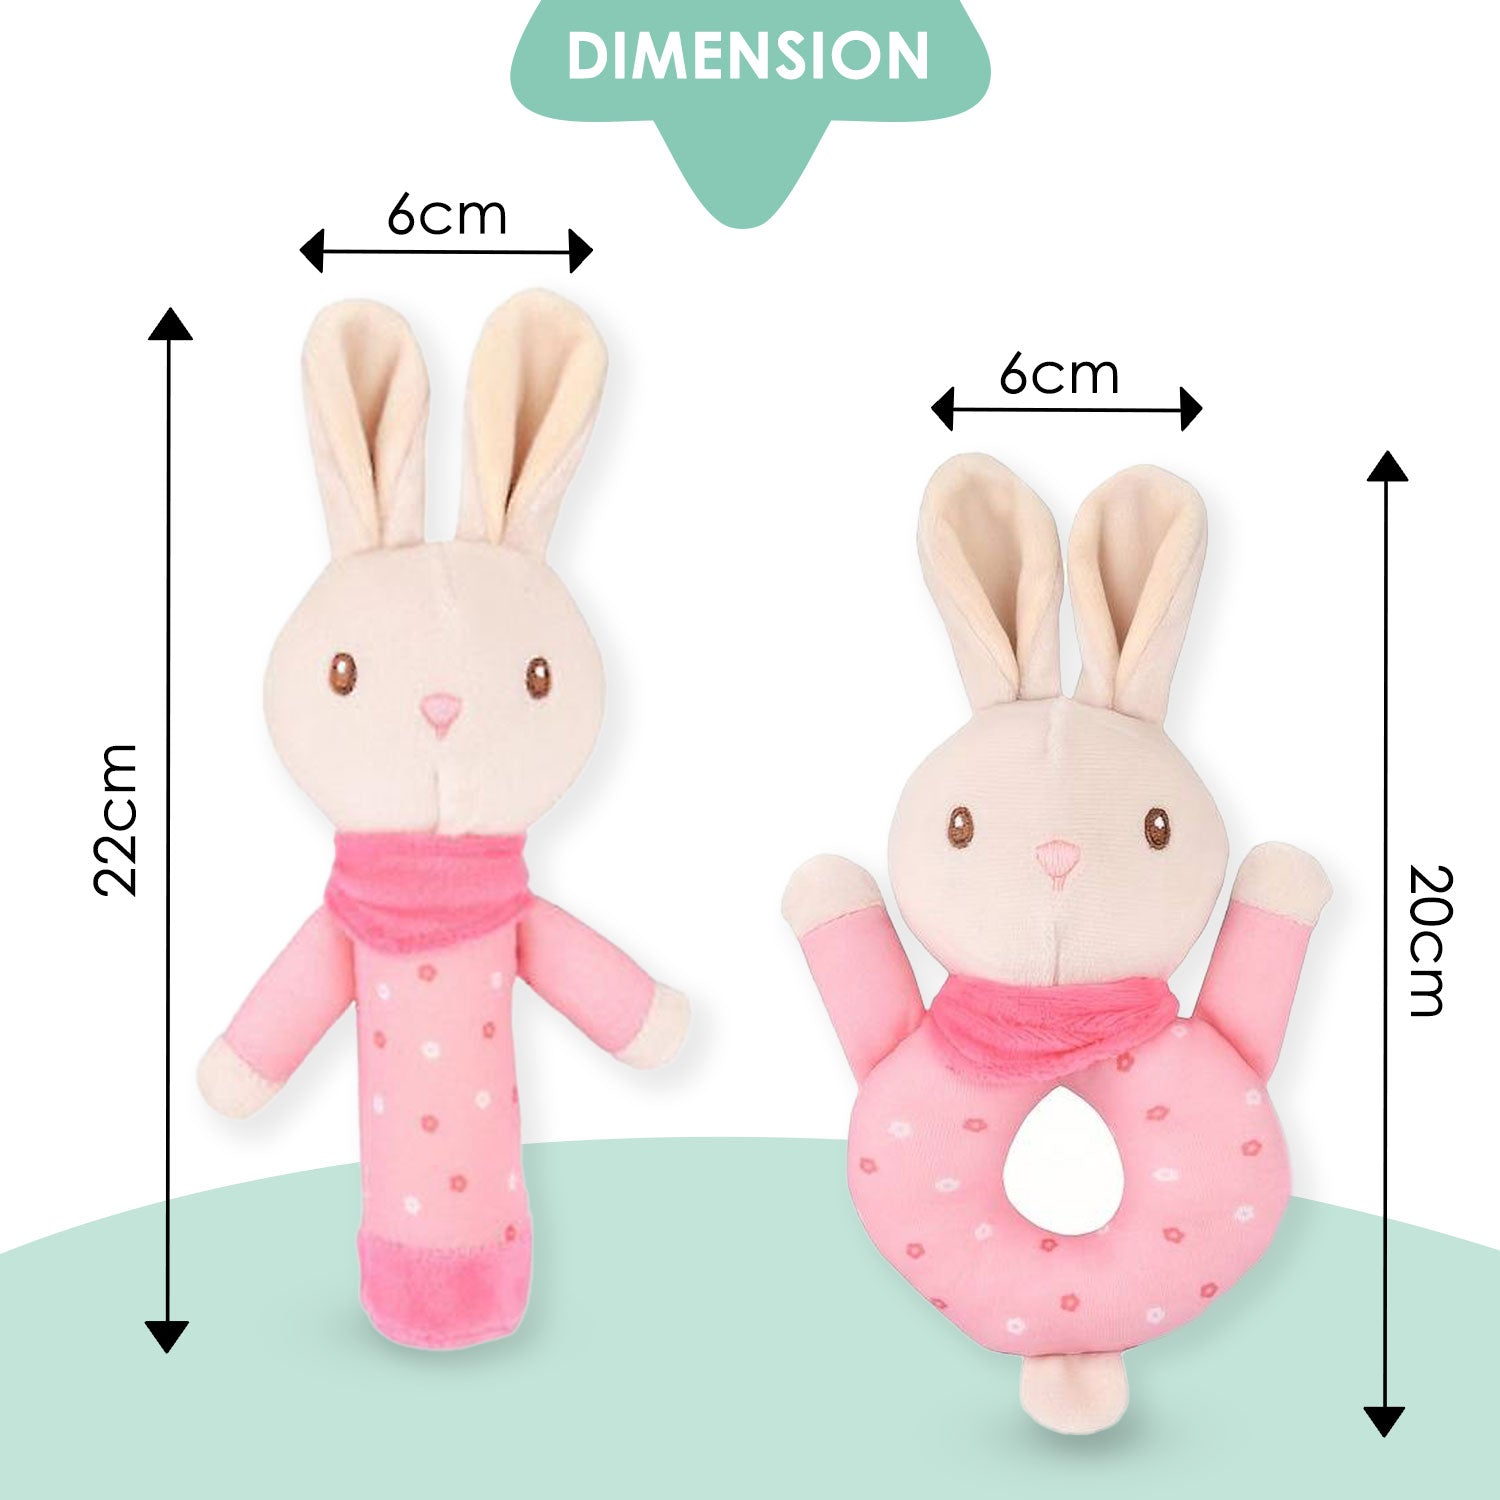 Baby Moo Sweet Bunny 2 Pack Squeaker Handheld Rattle Toy - Pink